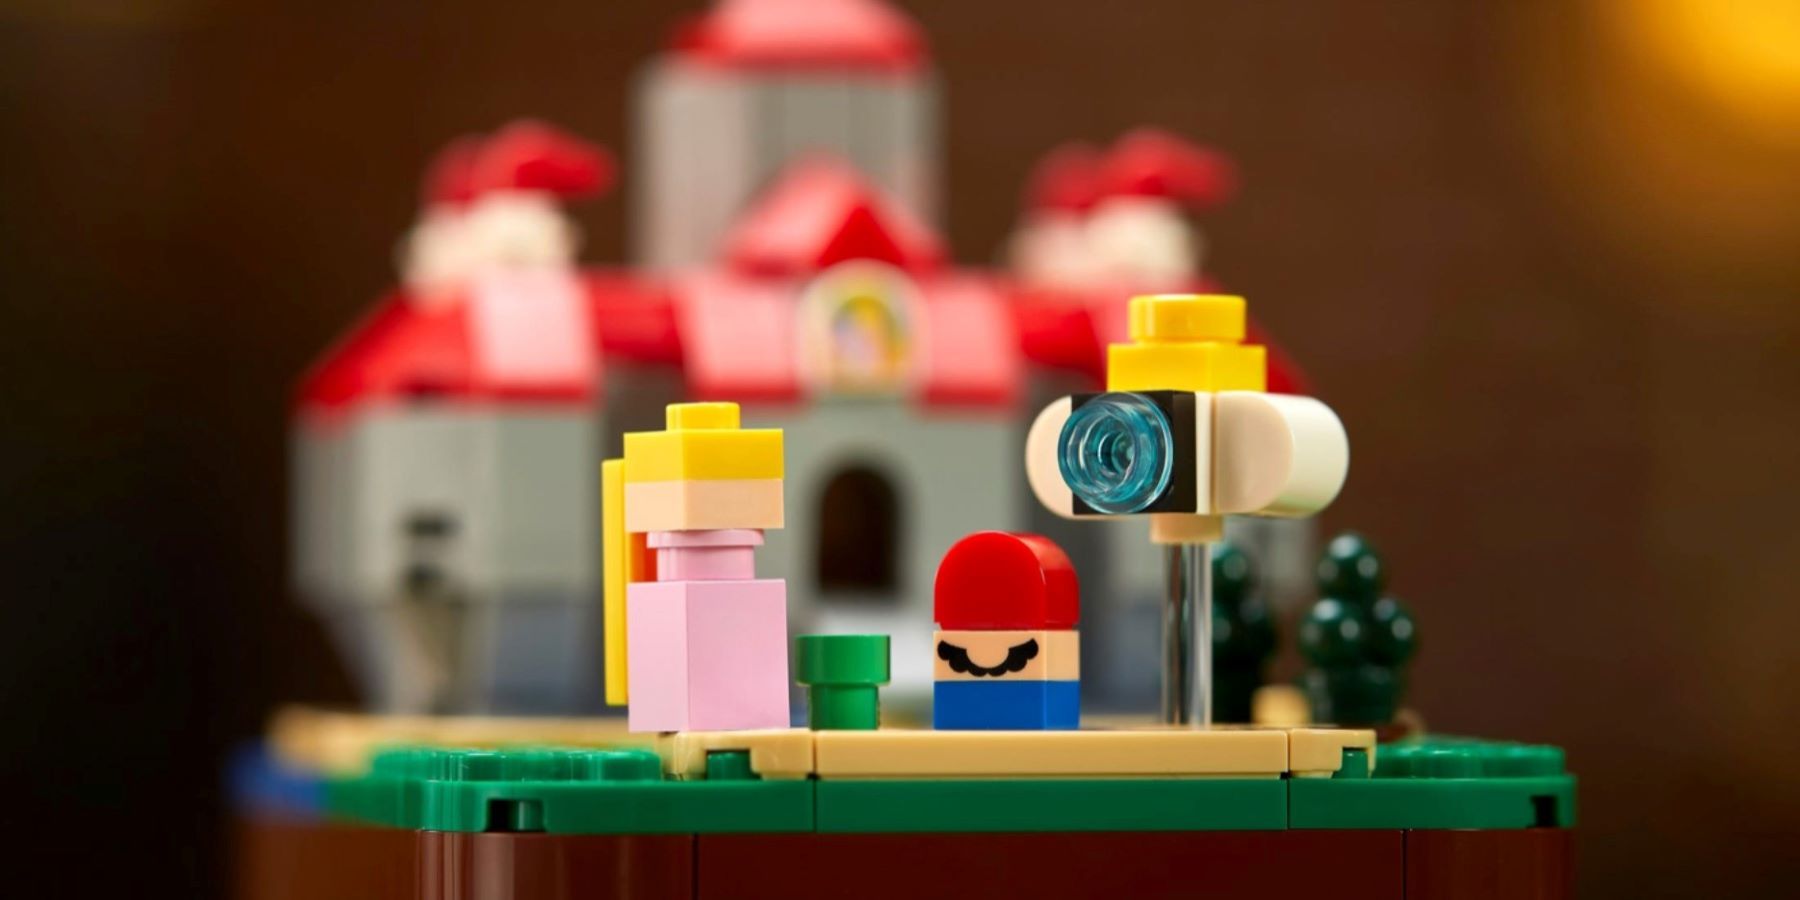 LEGO microfigures of Mario, Princess Peach, and a Lakitu in front of Peach's Castle in the Super Mario 64 LEGO set